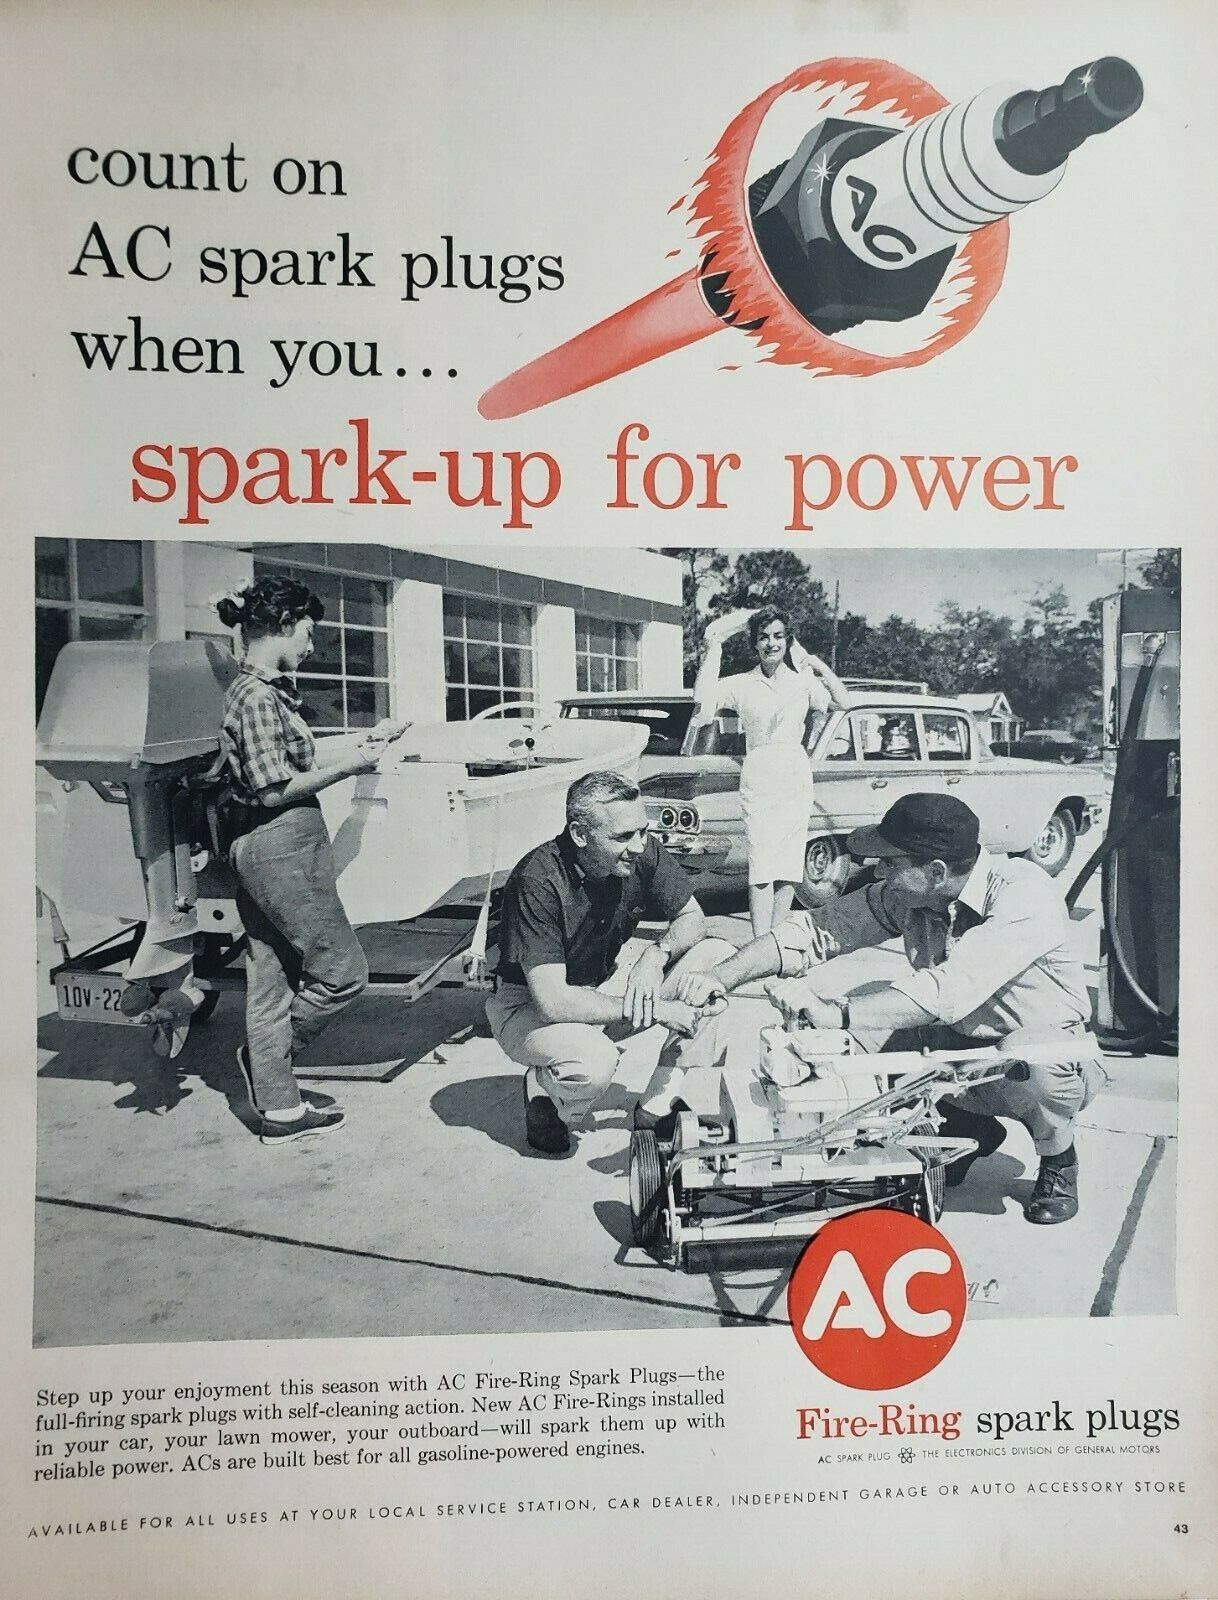 Lot of 12 Vintage AC Fire Ring Spark Plugs Ads Mancave Garage Xmas Ideas Popularna niska cena